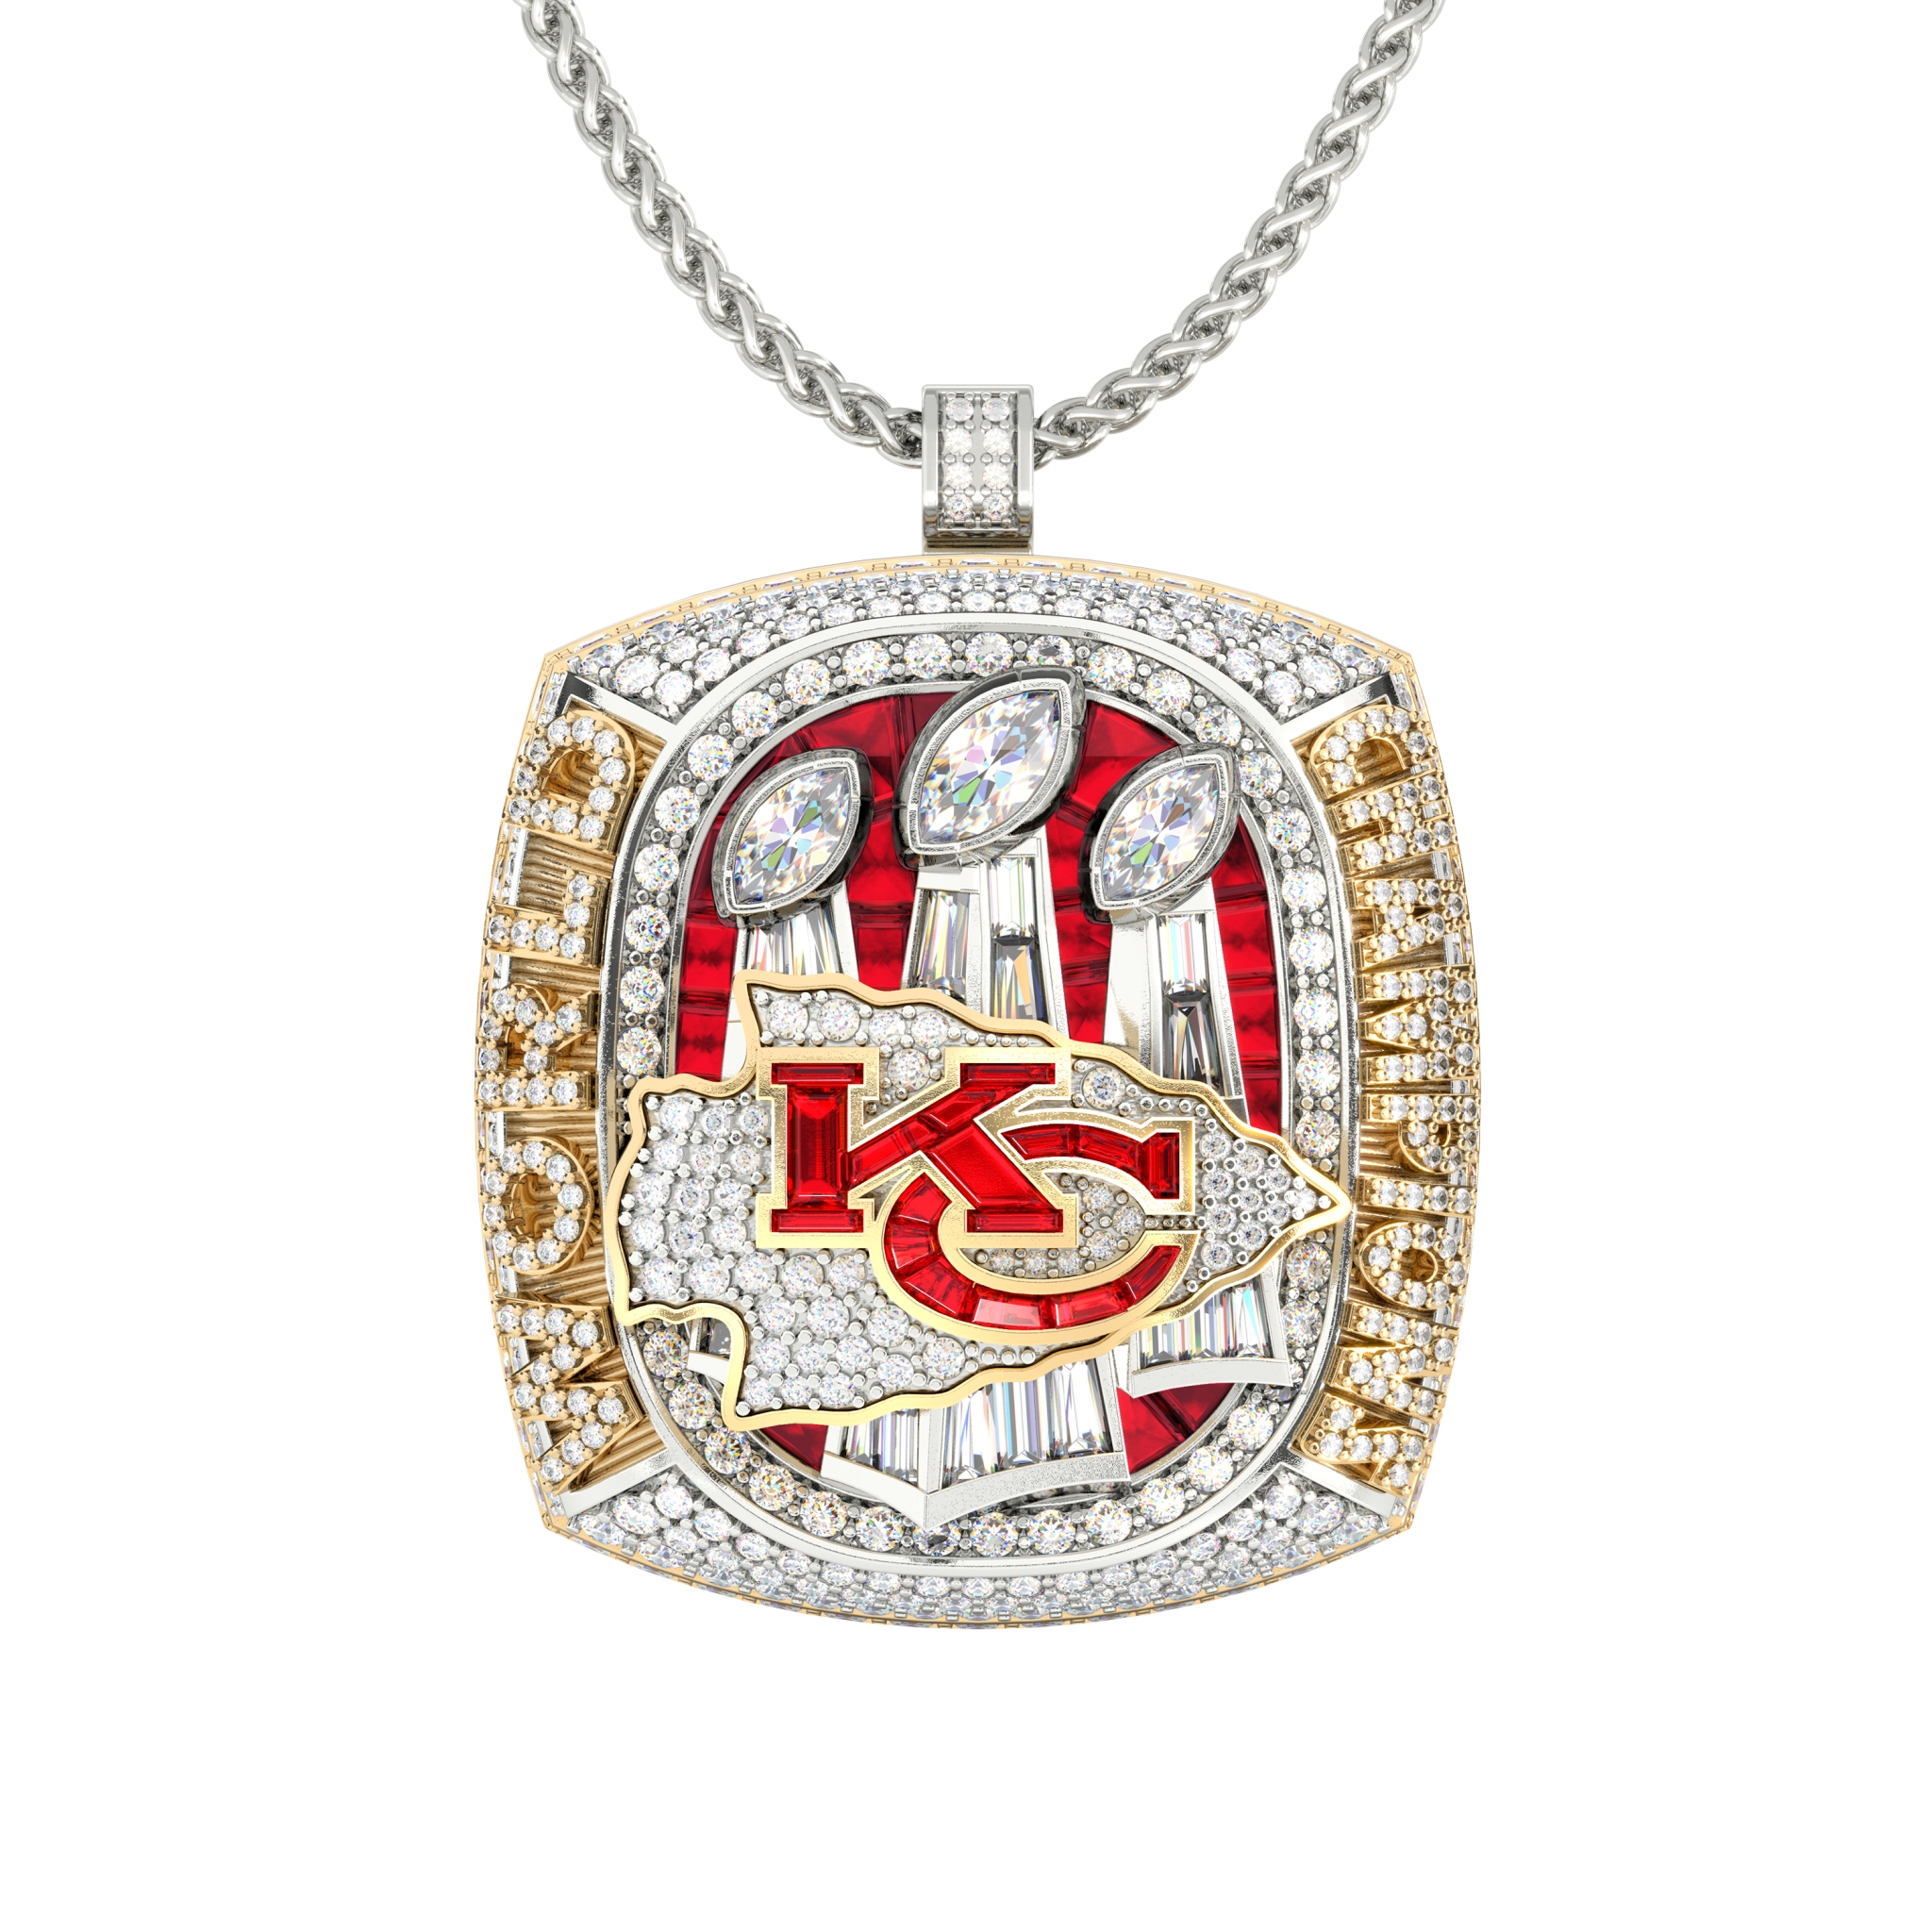 Patrick Mahomes Kansas City Chiefs Super Bowl LVII Champions Ring